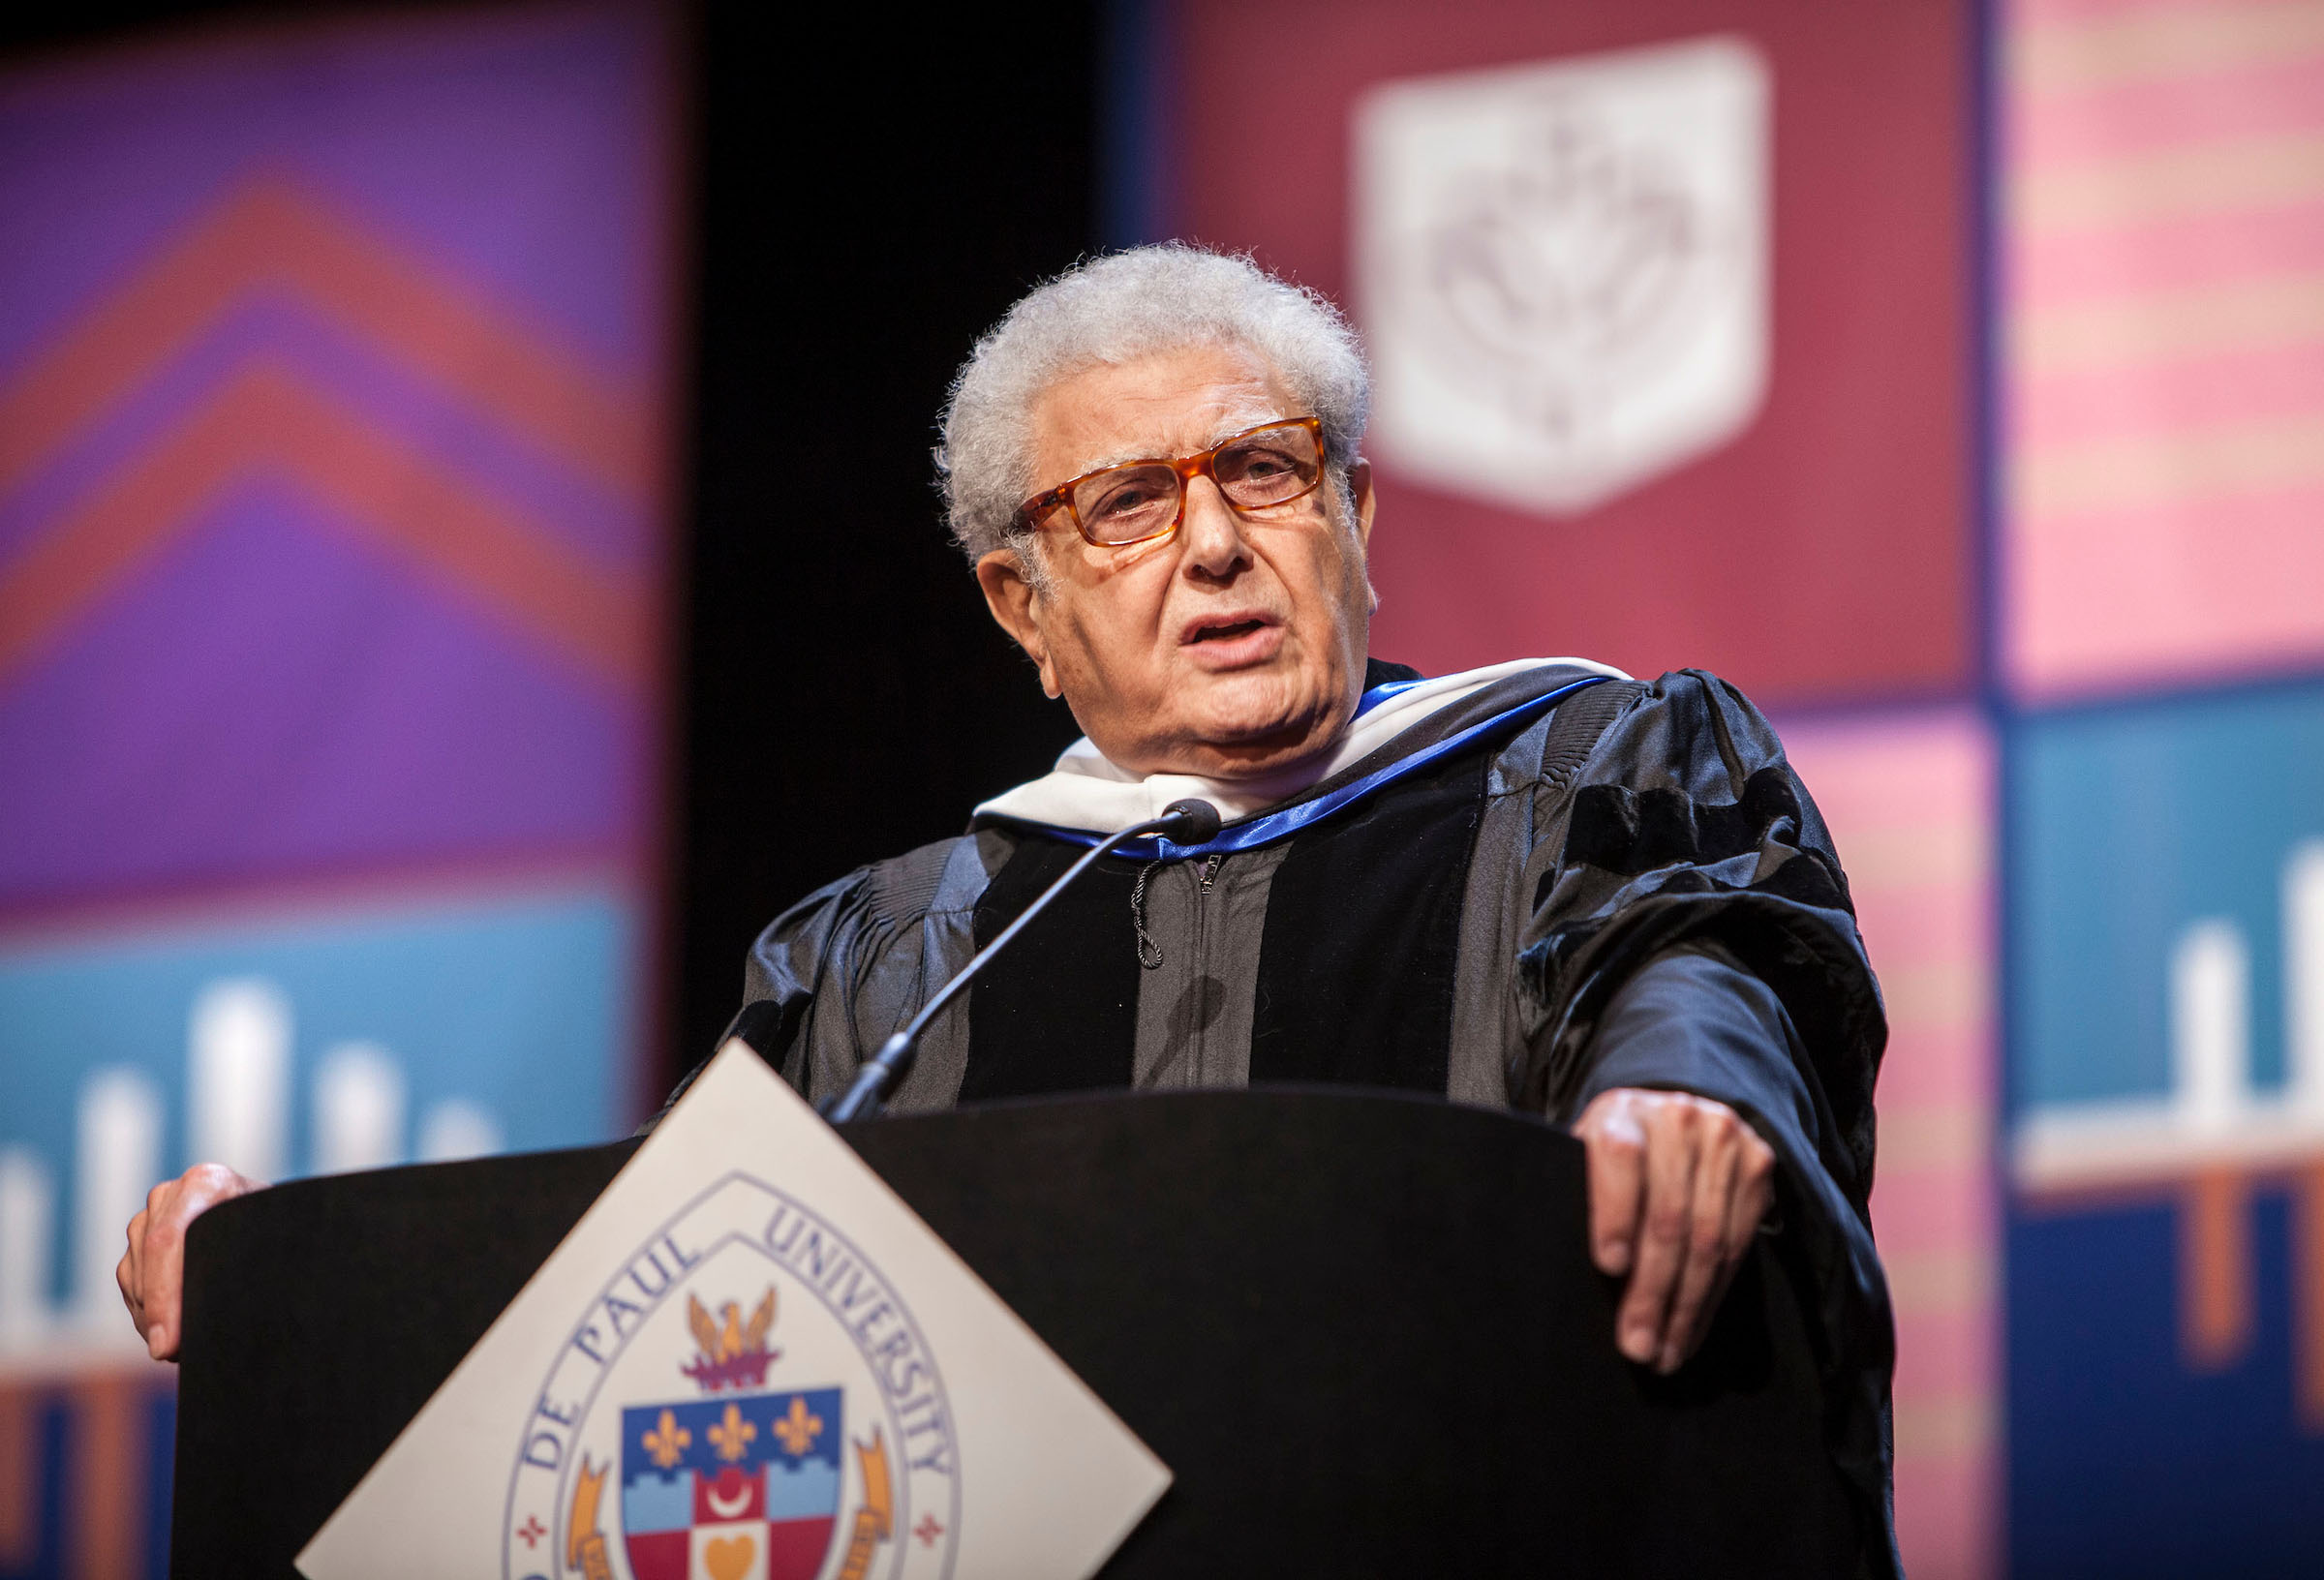 DePaul University Emeritus Professor of Law M. Cherif Bassiouni